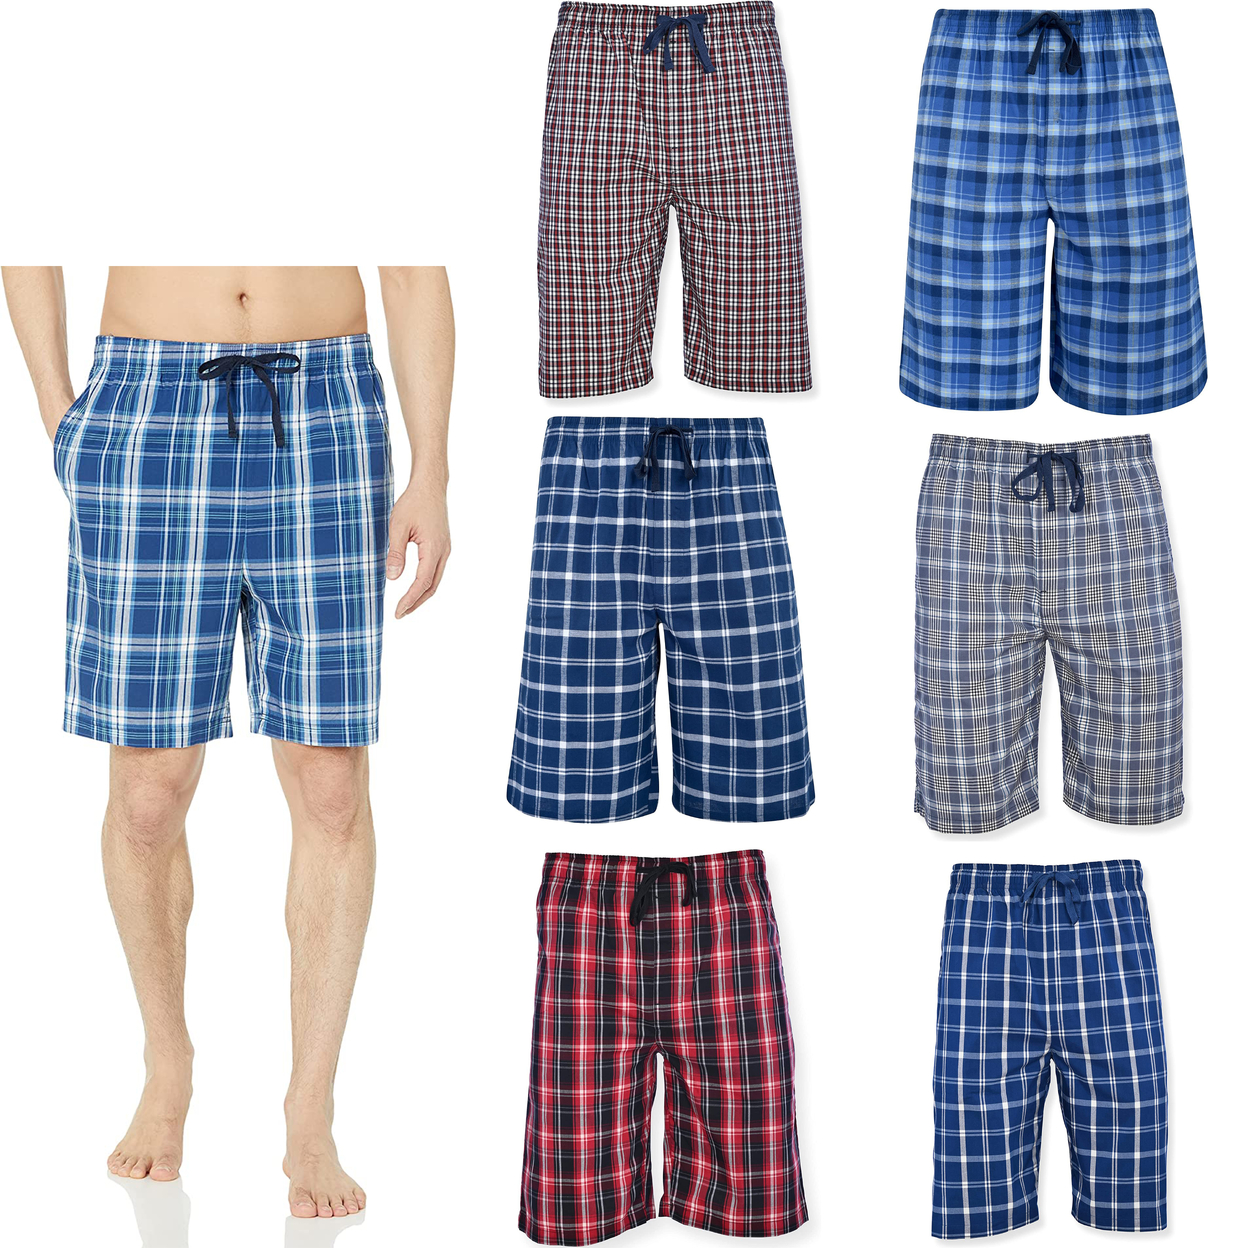 2-Pack: Men's Ultra Soft Plaid Lounge Pajama Sleep Wear Shorts - Black & Red, Medium